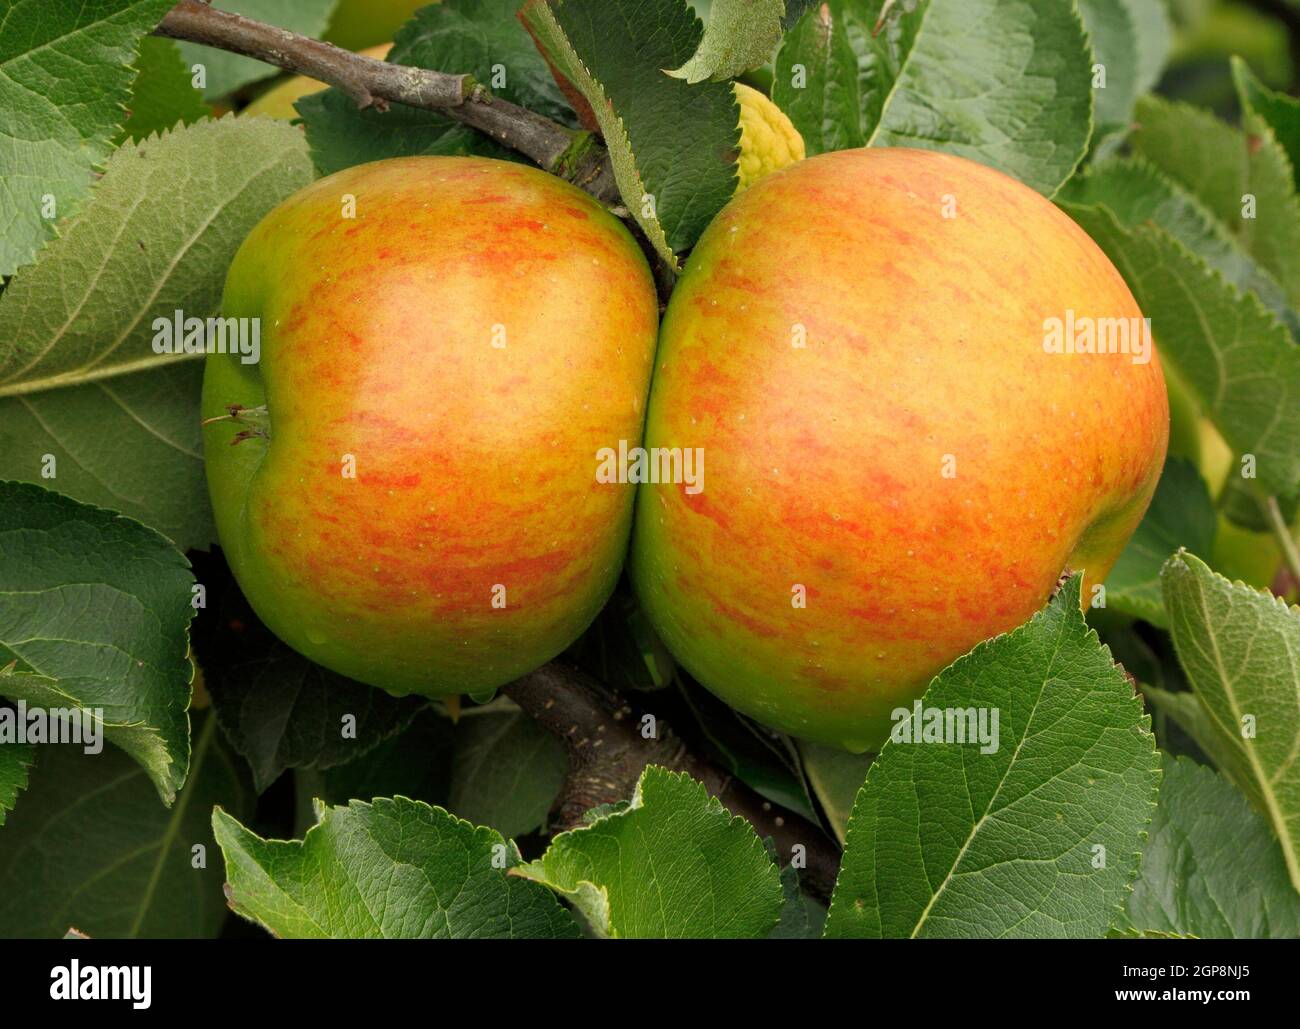 Pomme 'Bramley's seedling', 'Bramley', pommes, fruit, croissant sur arbre, malus domestica, saine alimentation Banque D'Images